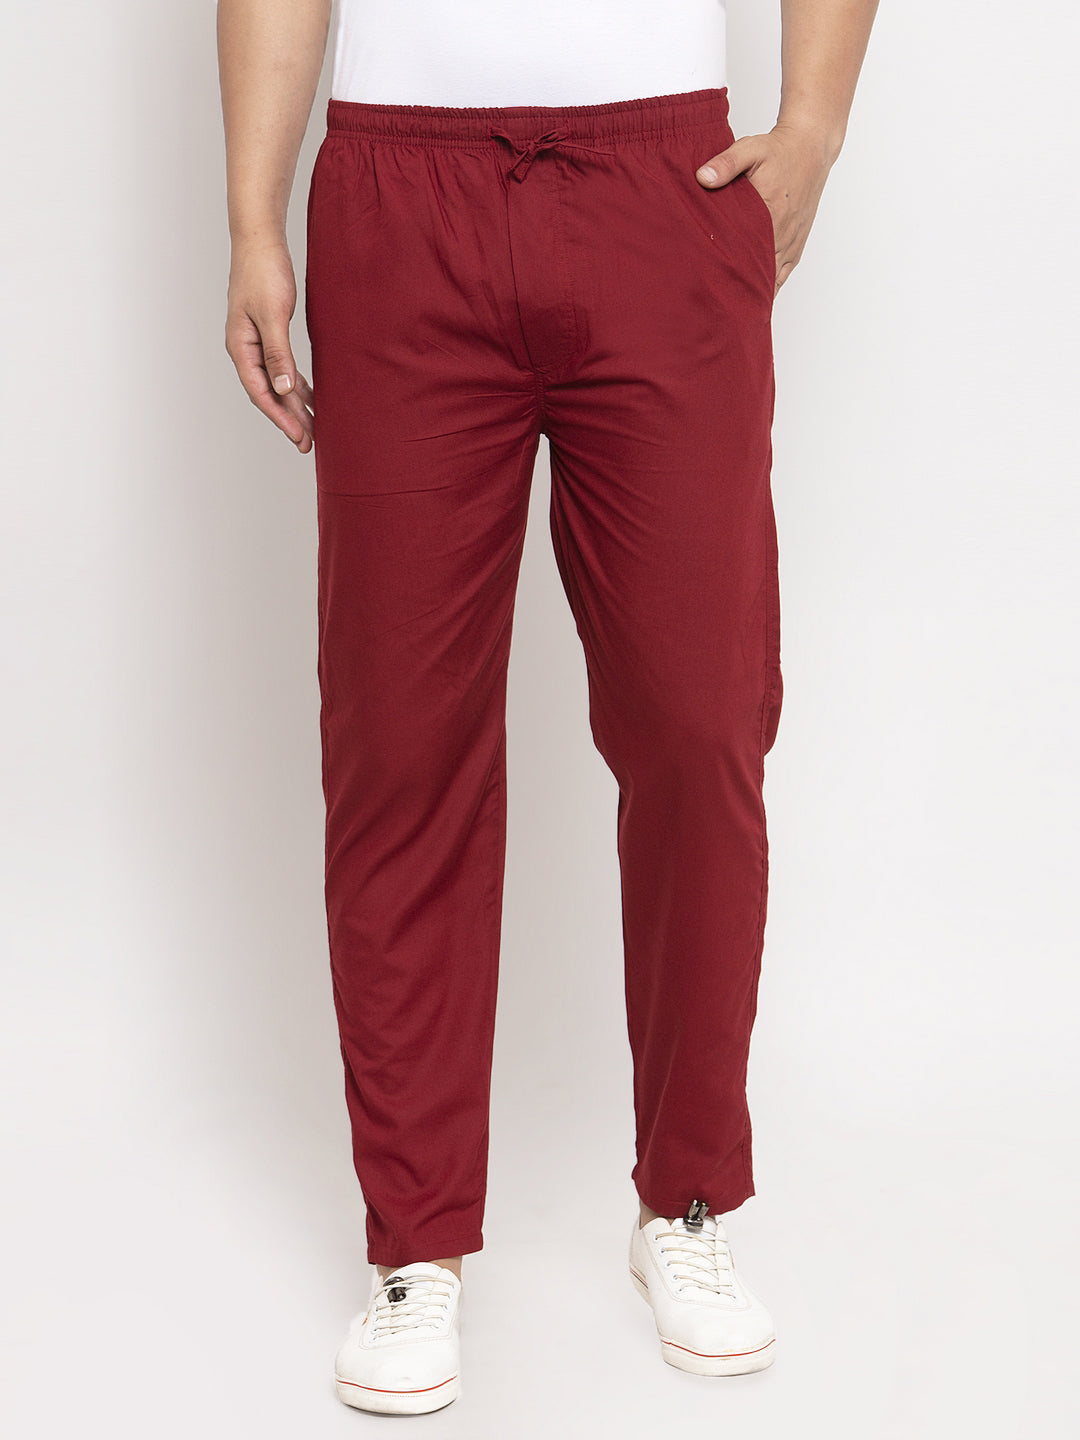 FashionOutfit Men's Solid Long Length Drawstring Ankle Zipper Track Pants -  Walmart.com